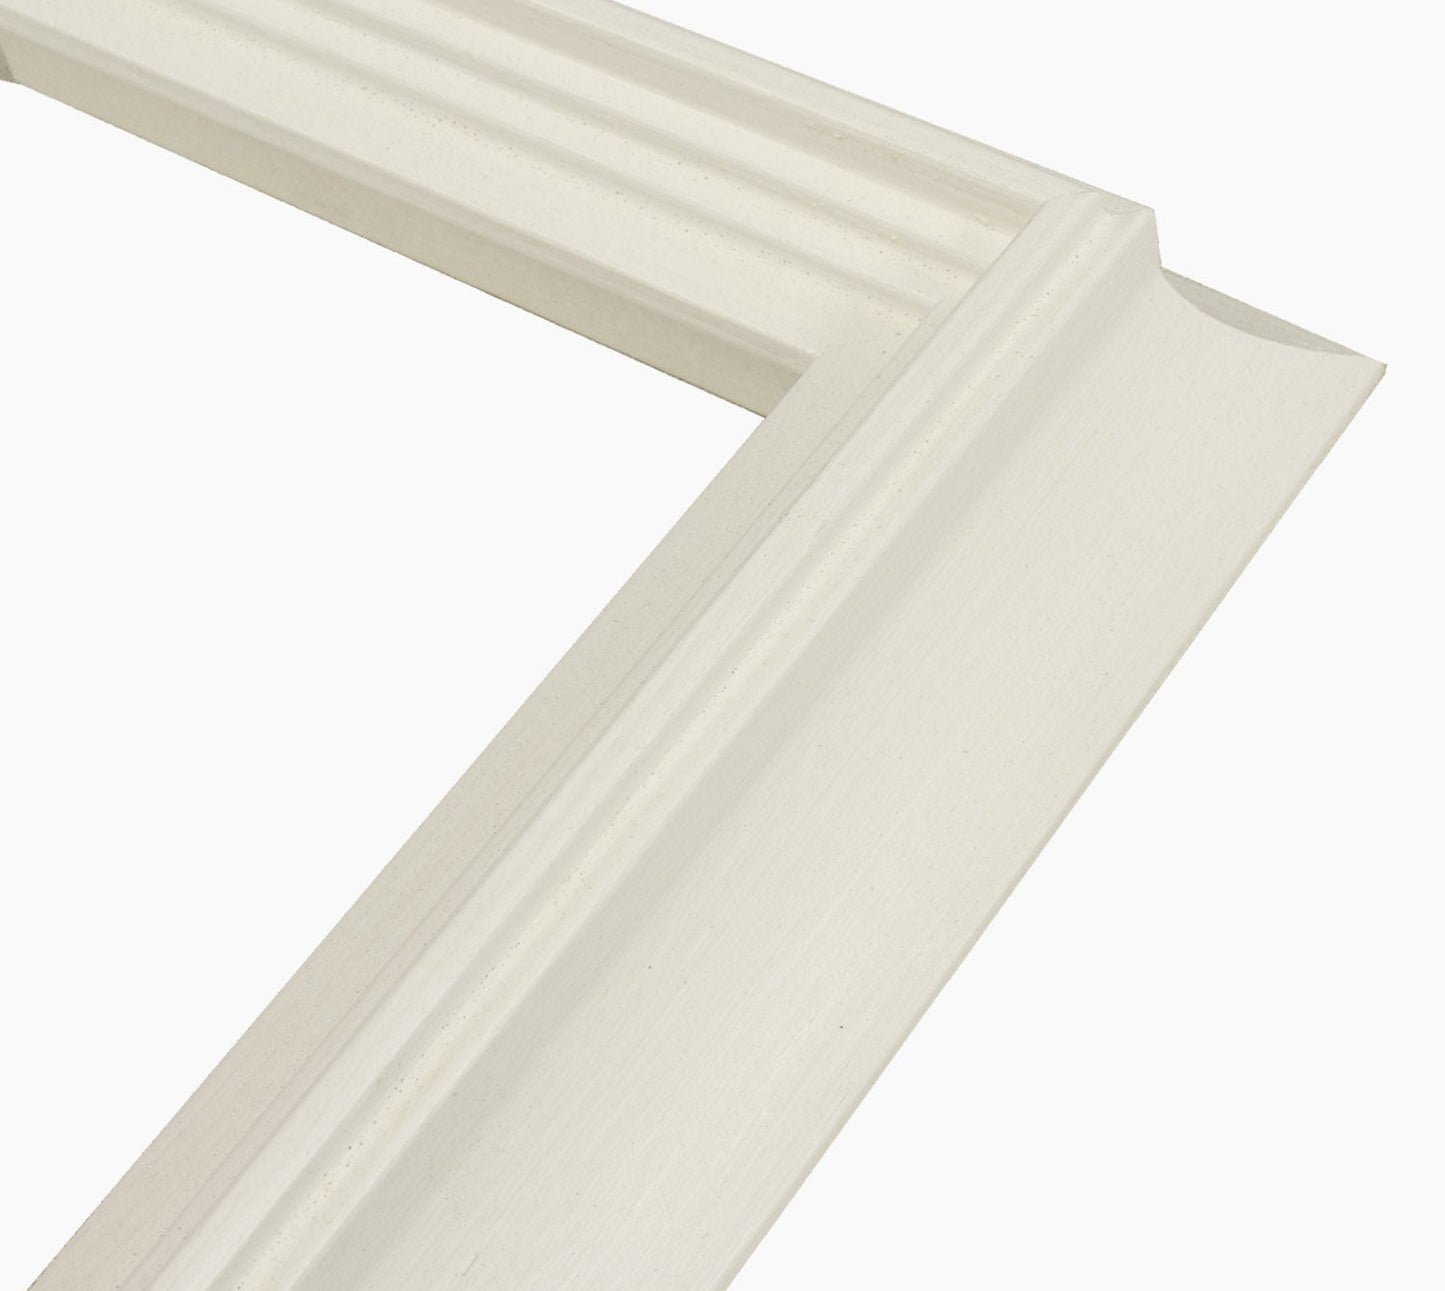 447.899 cadre en bois blanc avec de la cire mesure de profil 65x55 mm Lombarda cornici S.n.c.